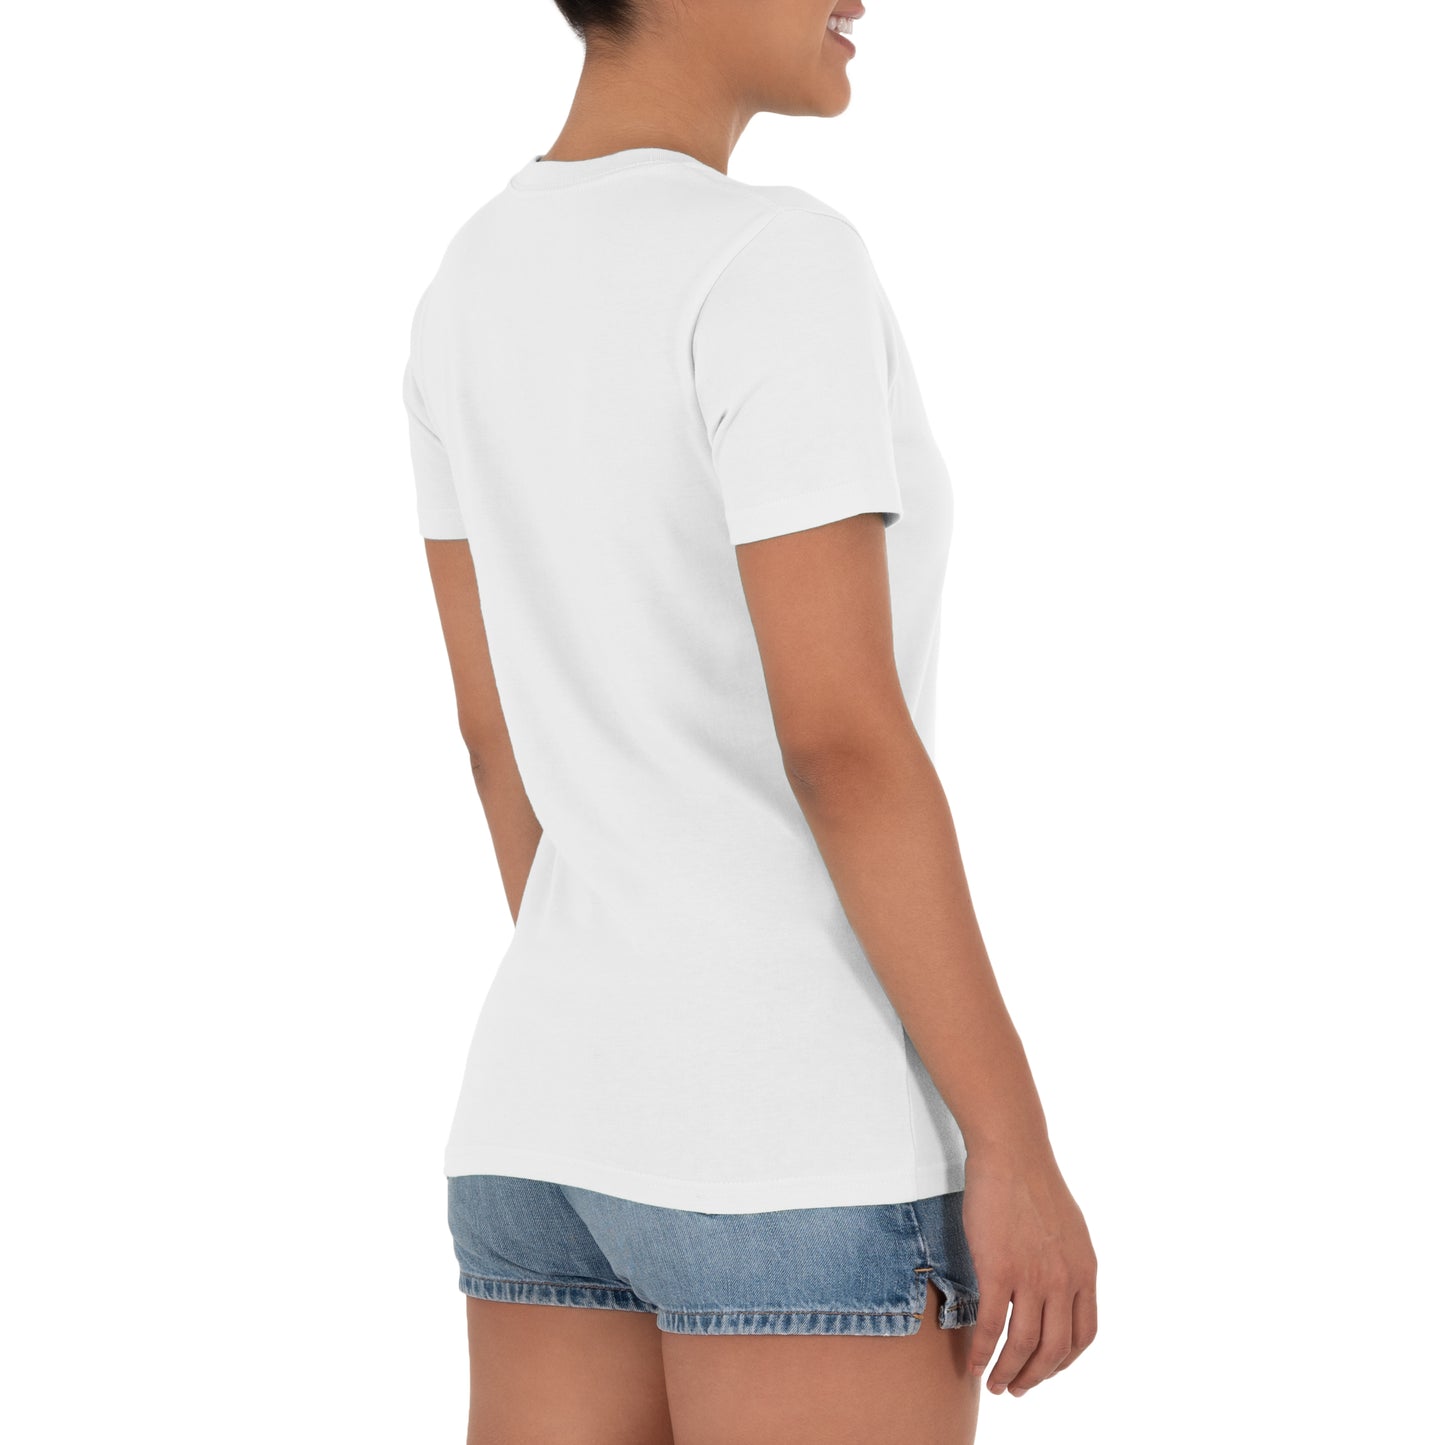 Ladies A Friend's Swim Short Sleeve White T-Shirt View 2